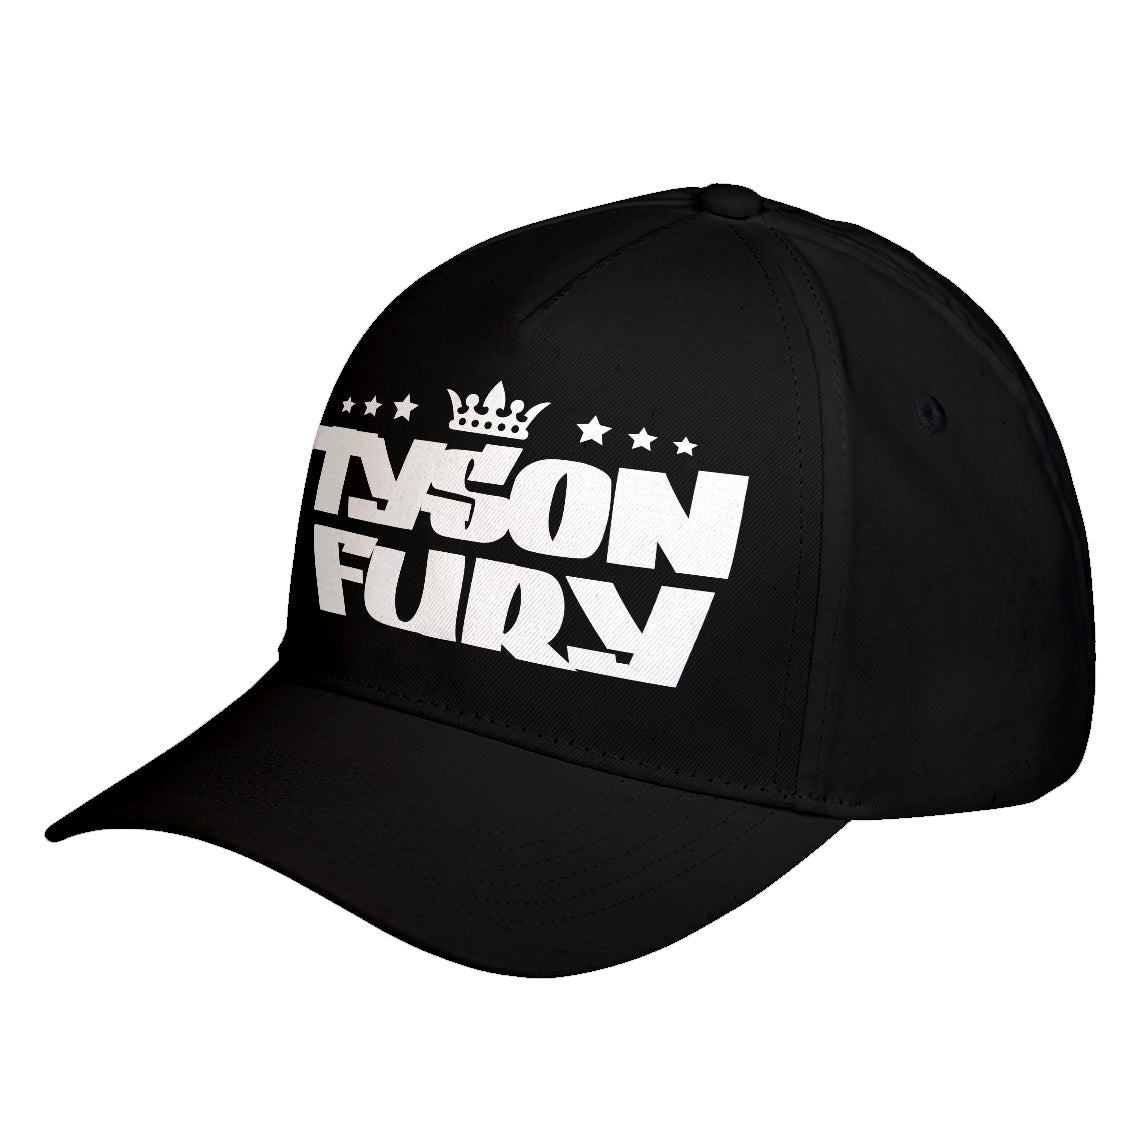 Hat Tyson Fury The Gypsy King Baseball Cap